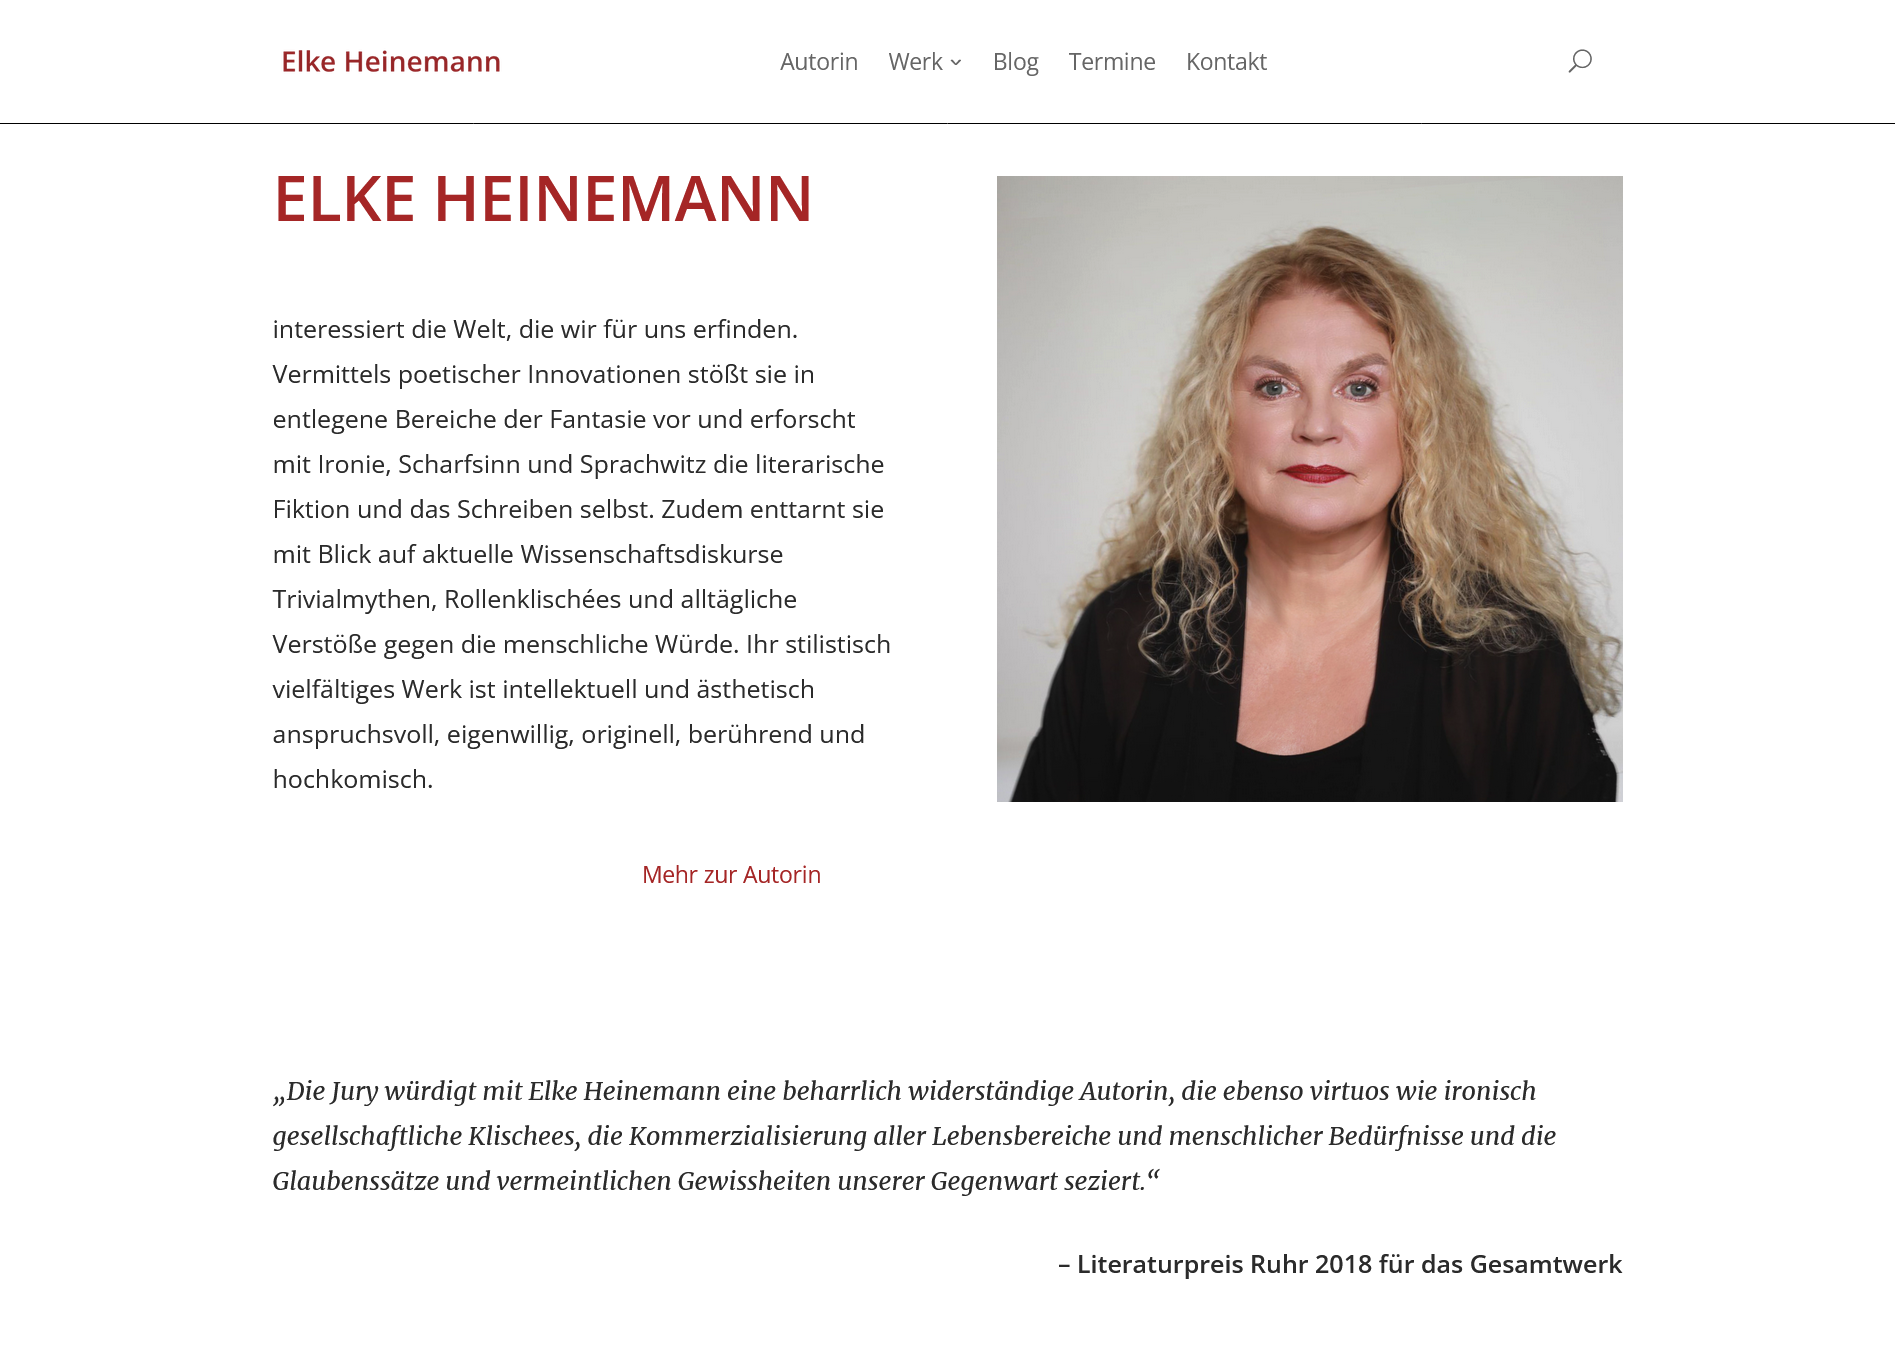 (c) Elke-heinemann.de